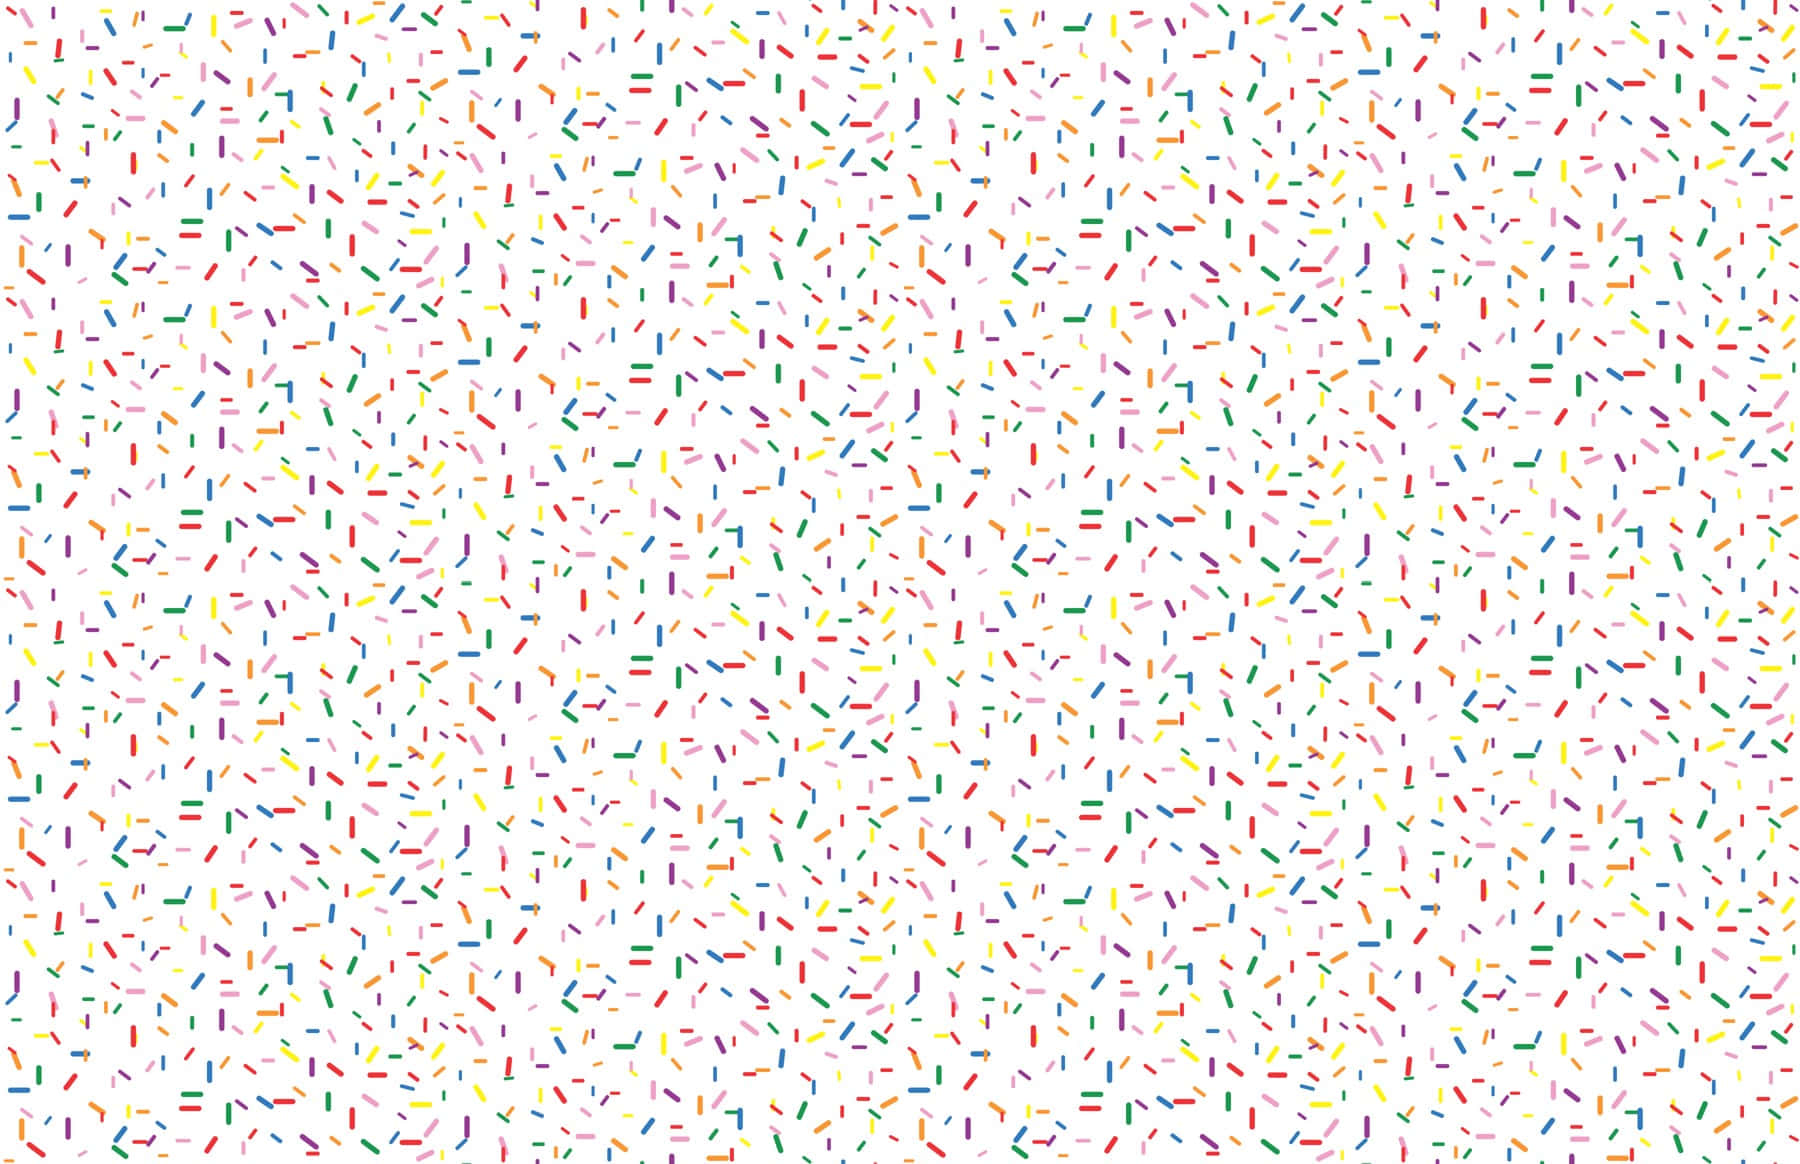 Colorful Sprinkles Pattern Wallpaper